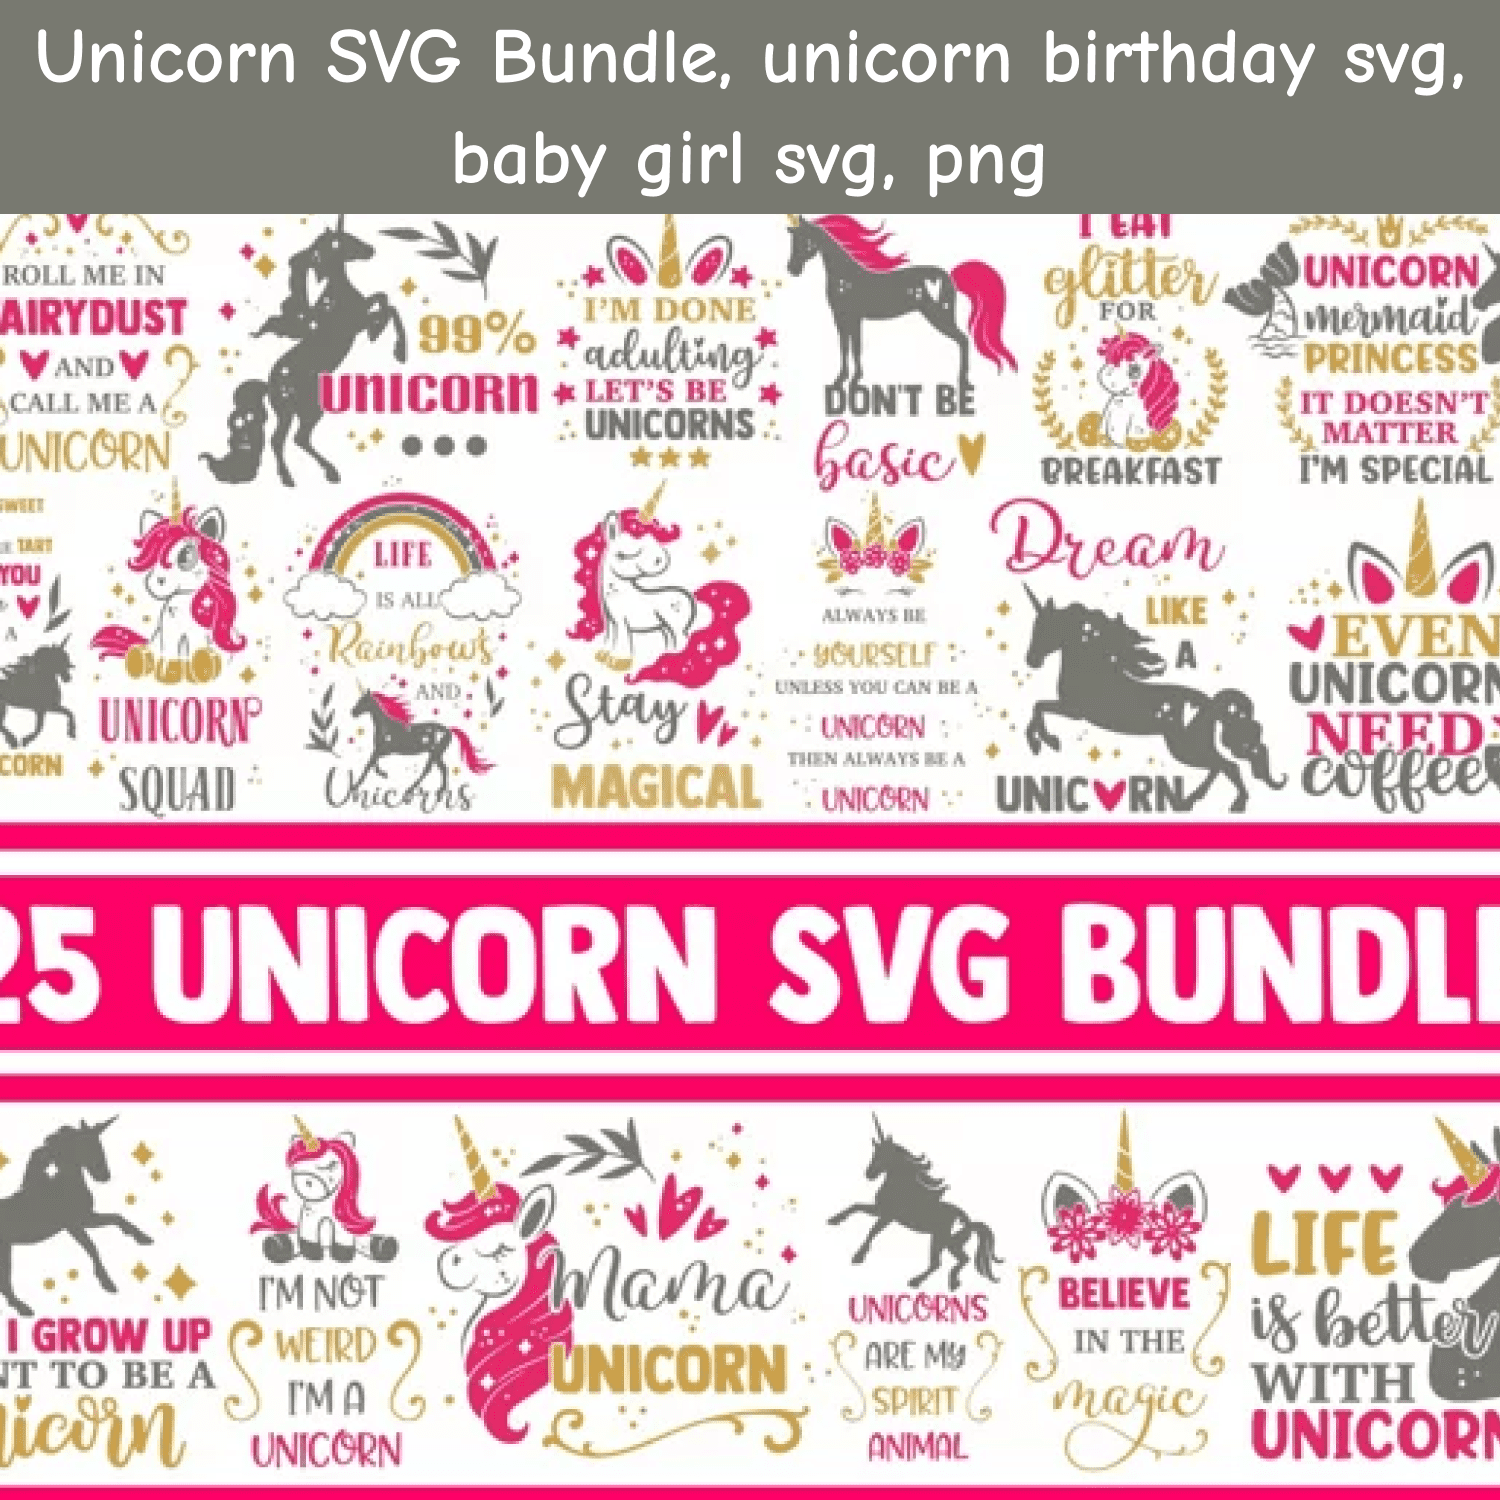 Unicorn SVG Bundle, unicorn birthday svg, baby girl.